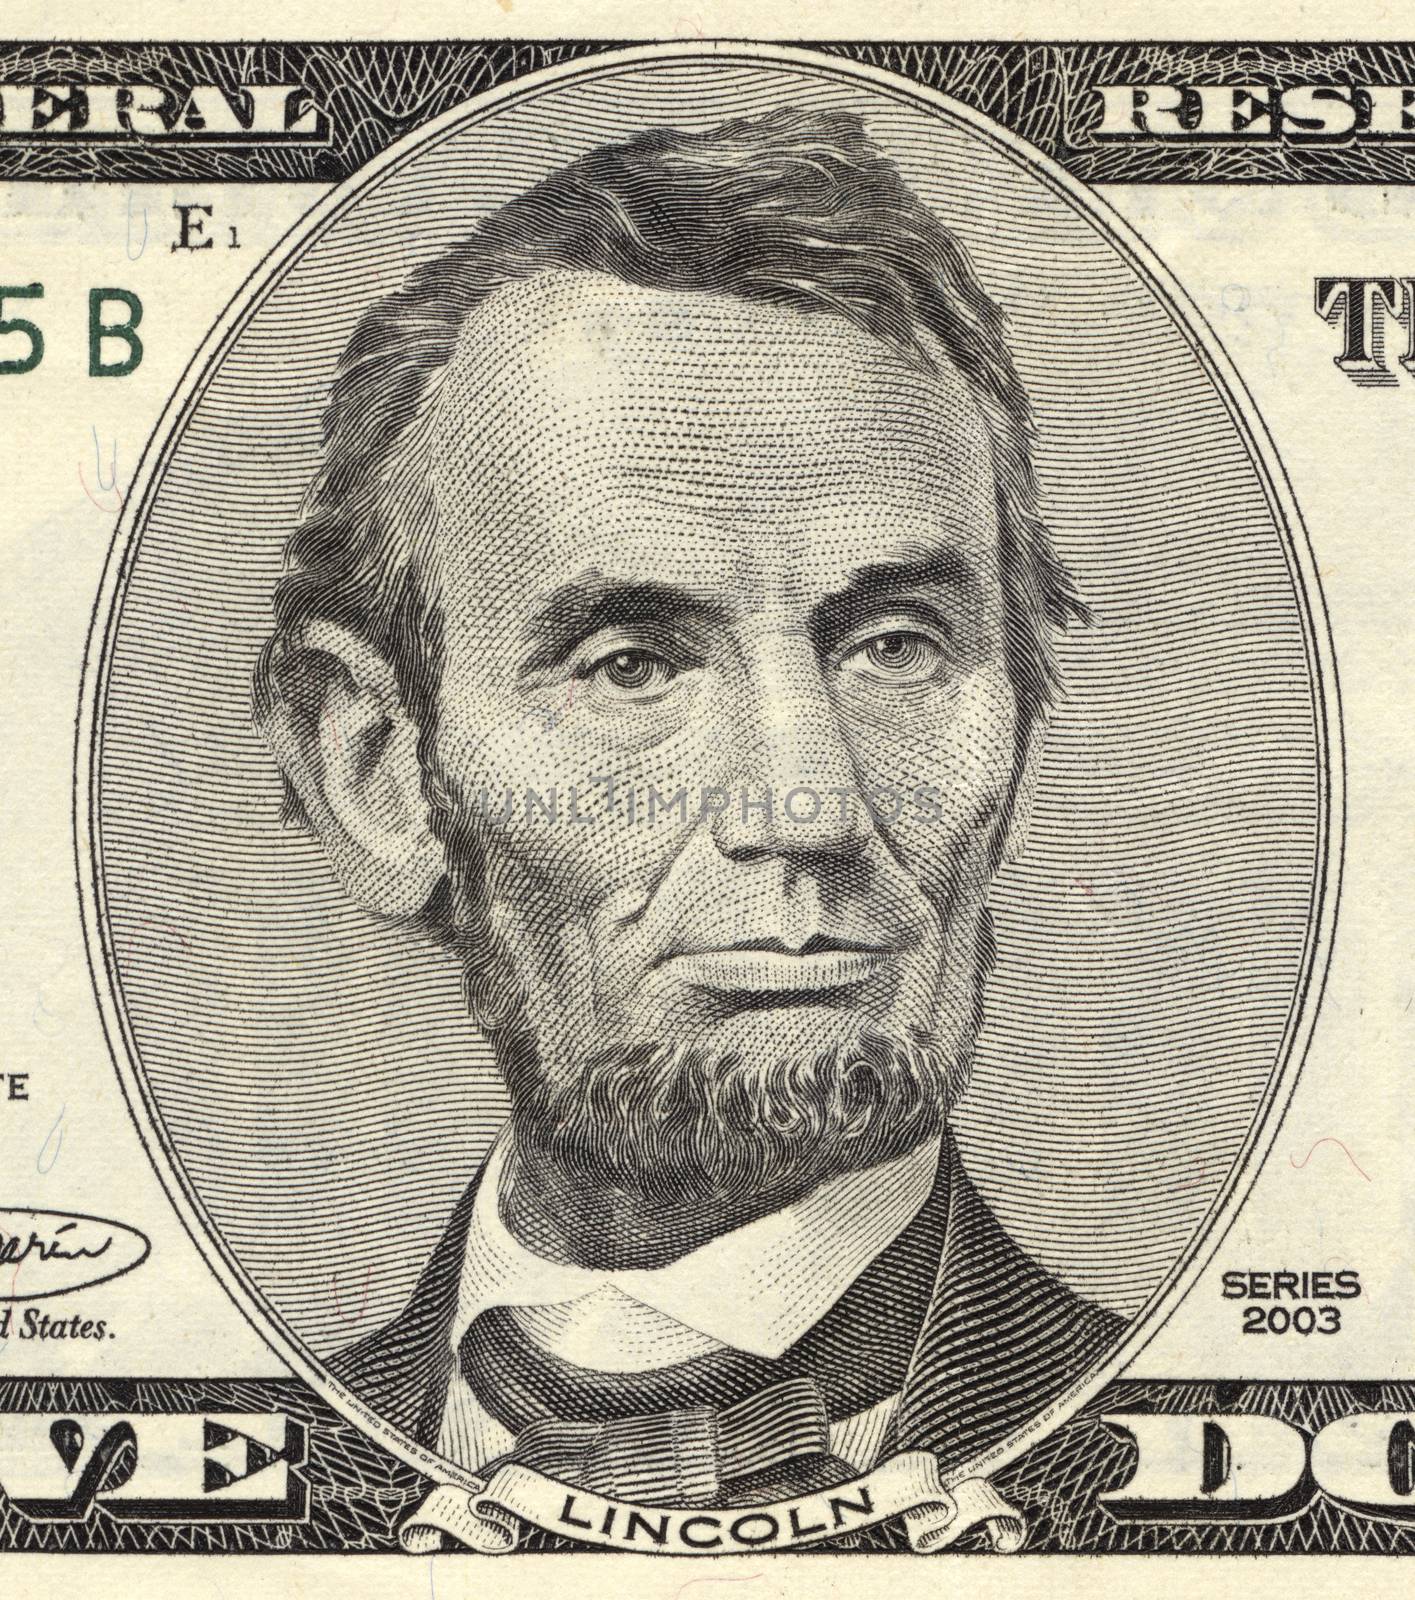 Abraham Lincoln portrait by Portokalis